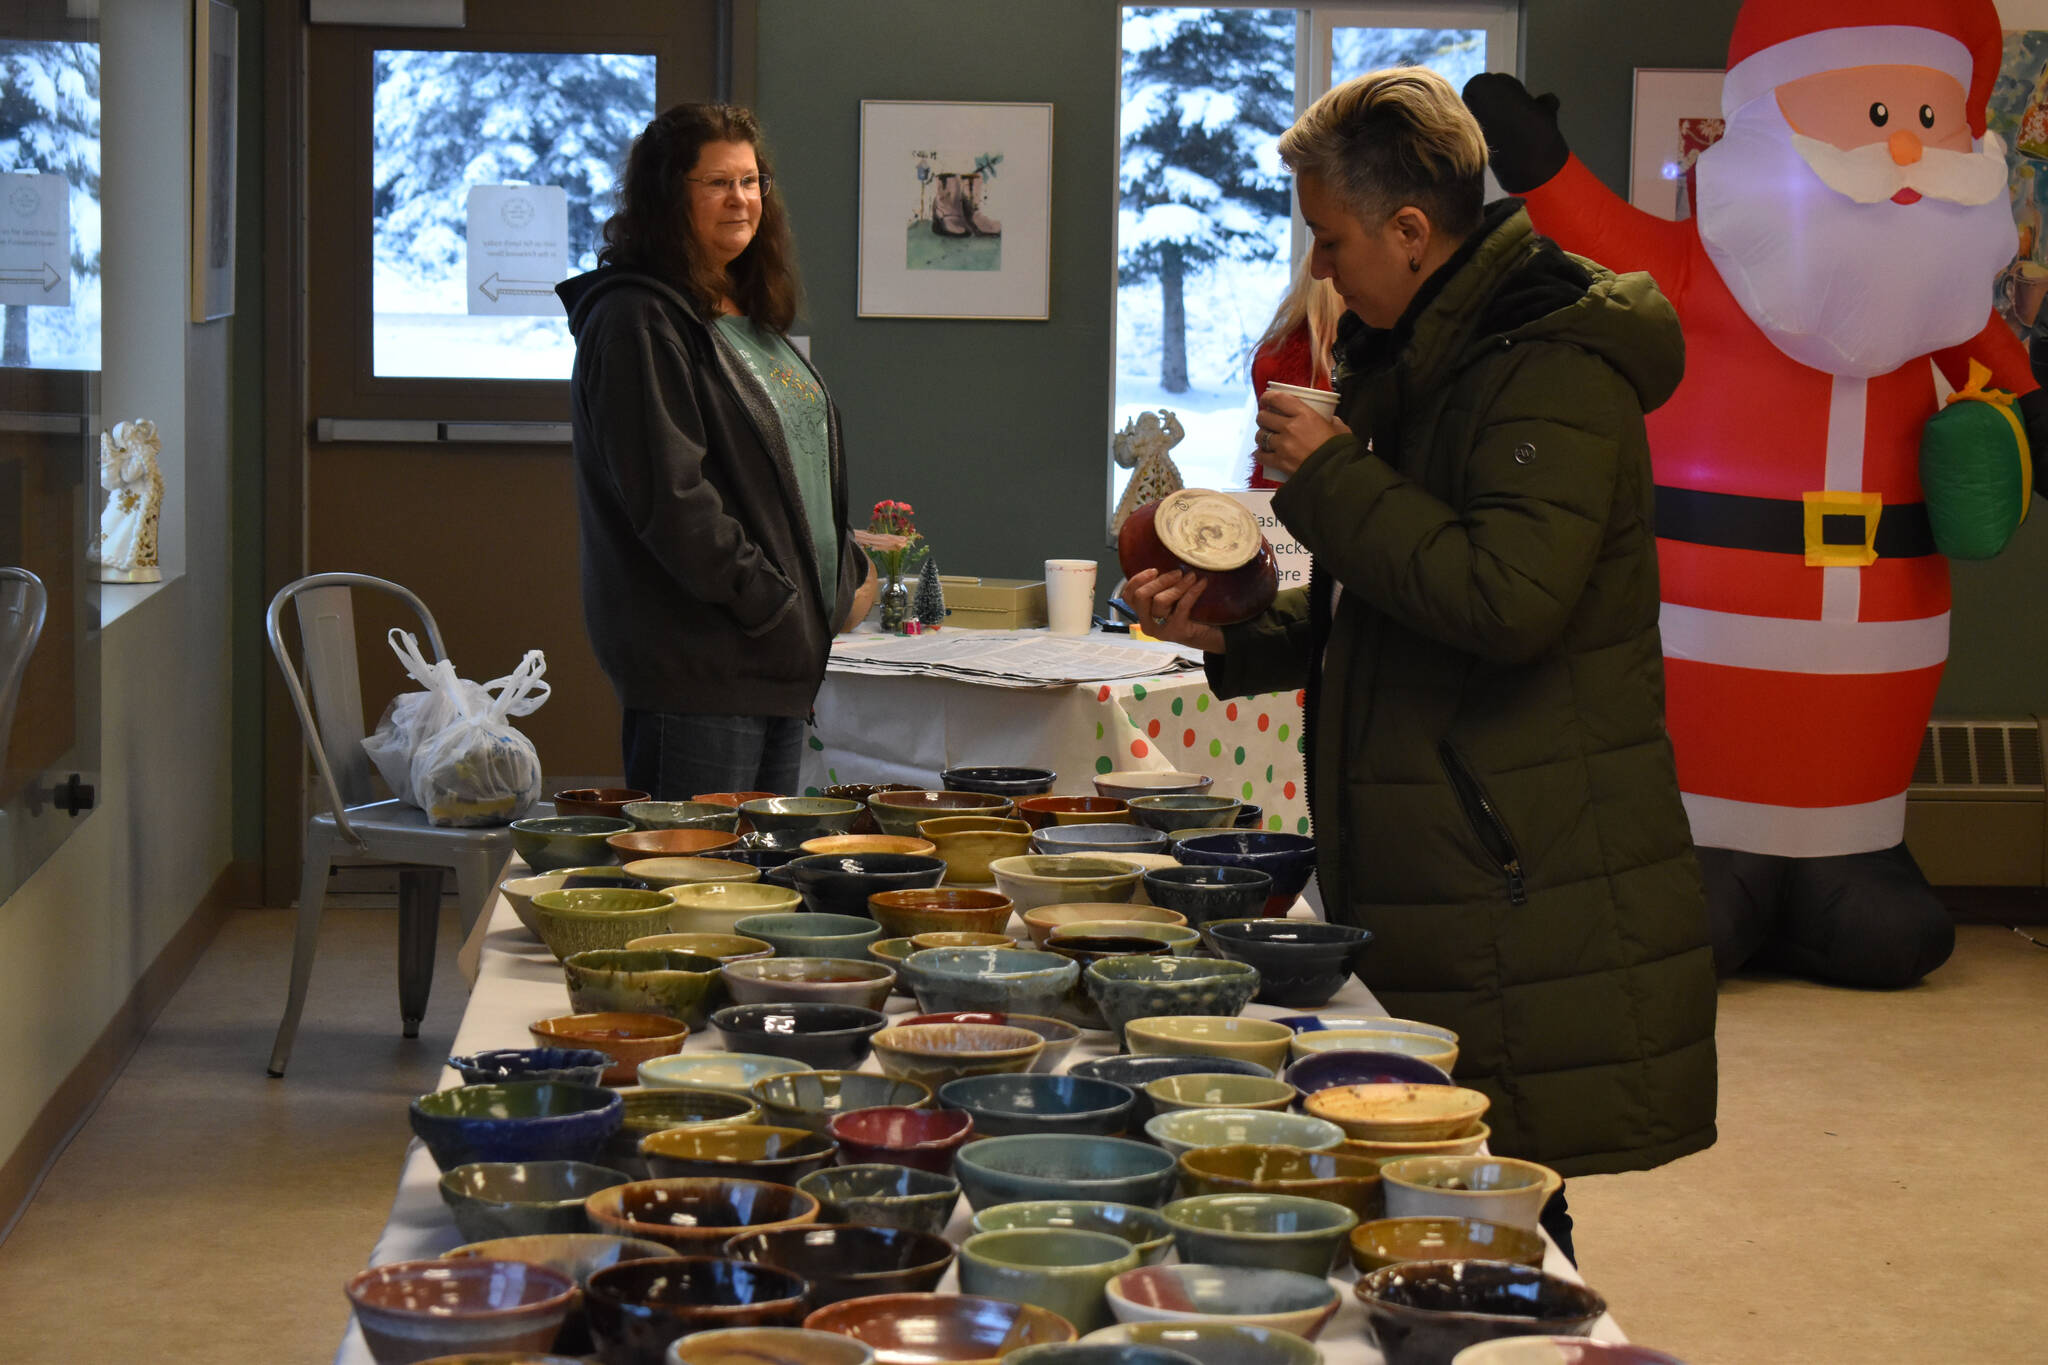 An attendee checks out the ceramic soup bowls during Bark, Block and Bowl on Saturday, Dec. 10, 2022, at the Kenai Peninsula Food Bank in Soldotna, Alaska. (Jake Dye/Peninsula Clarion)